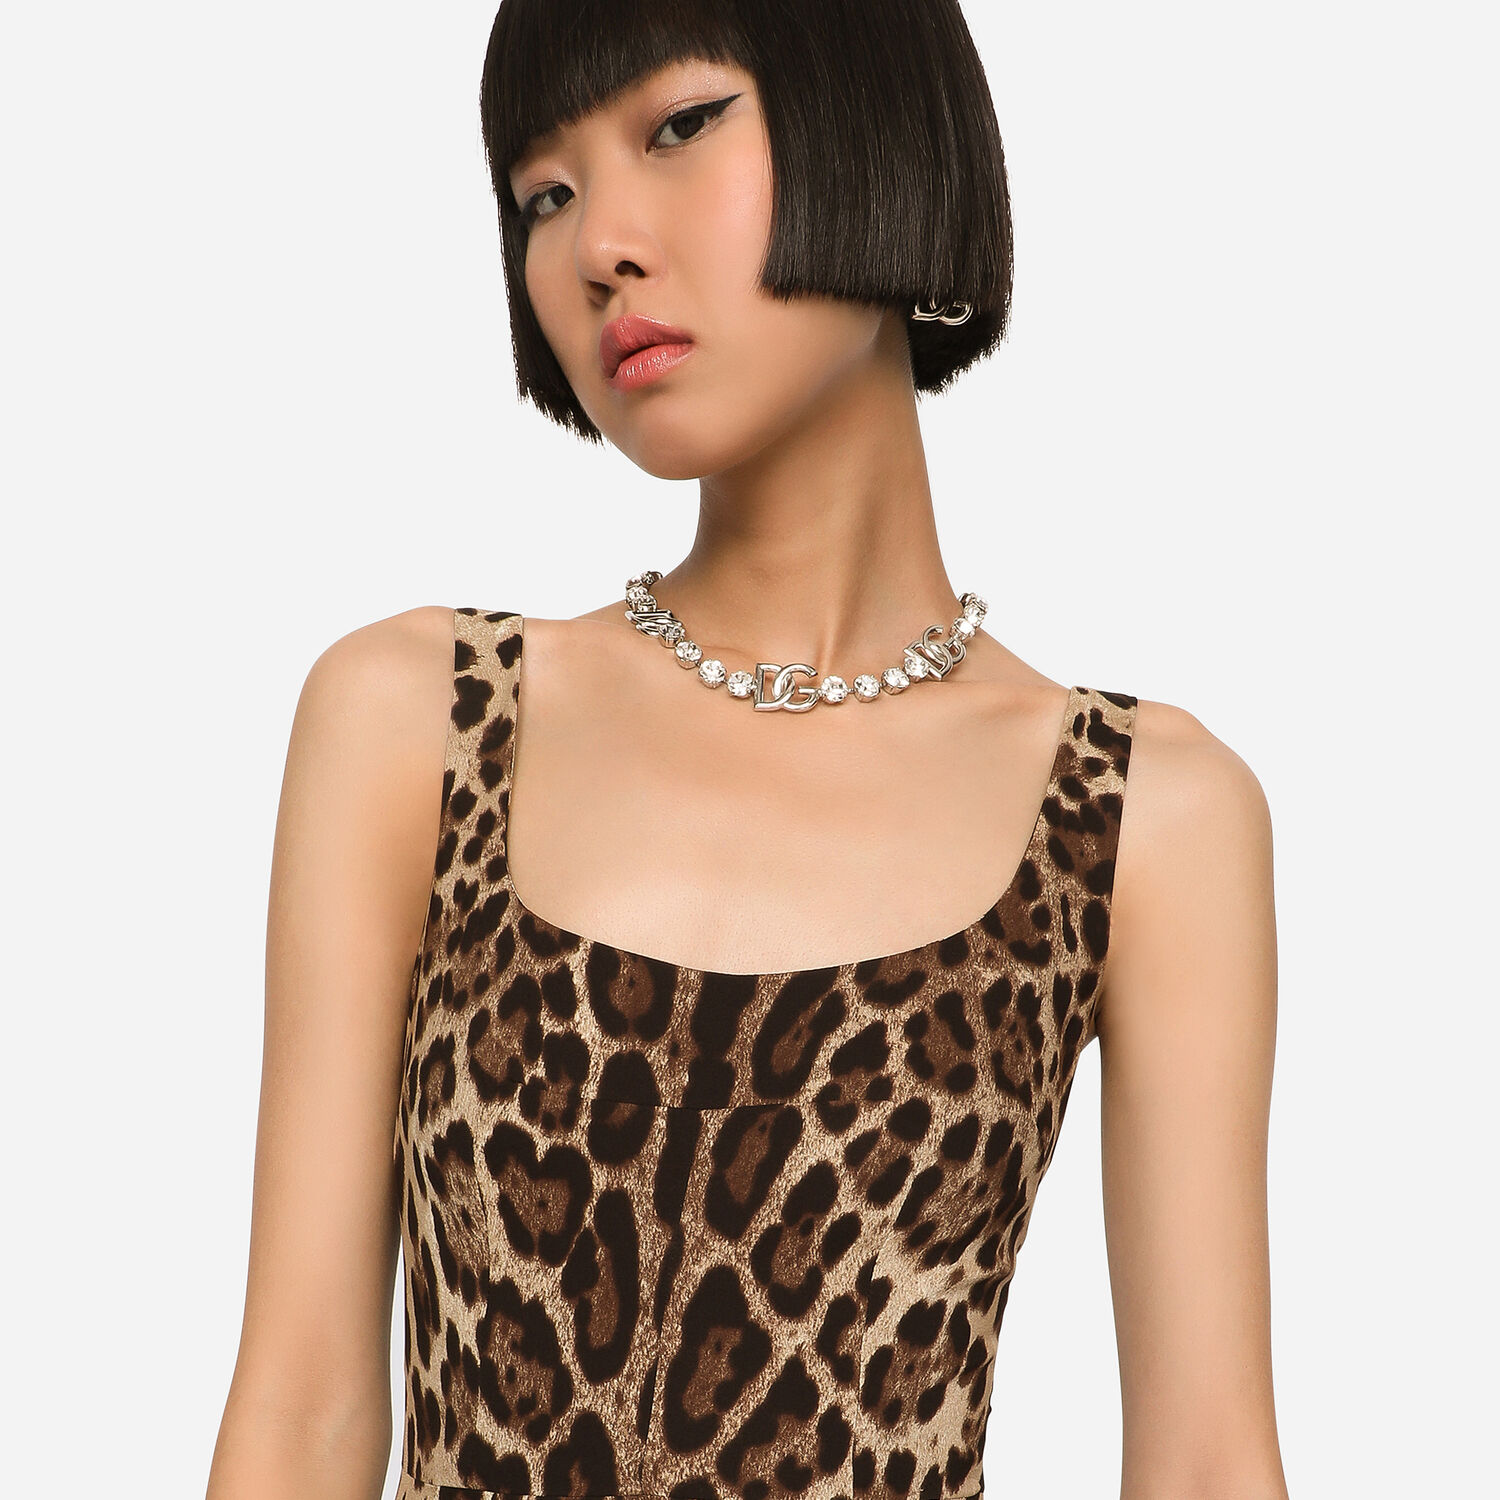 Dolce & Gabbana Leopard Print Bodycon Dress, $3,517